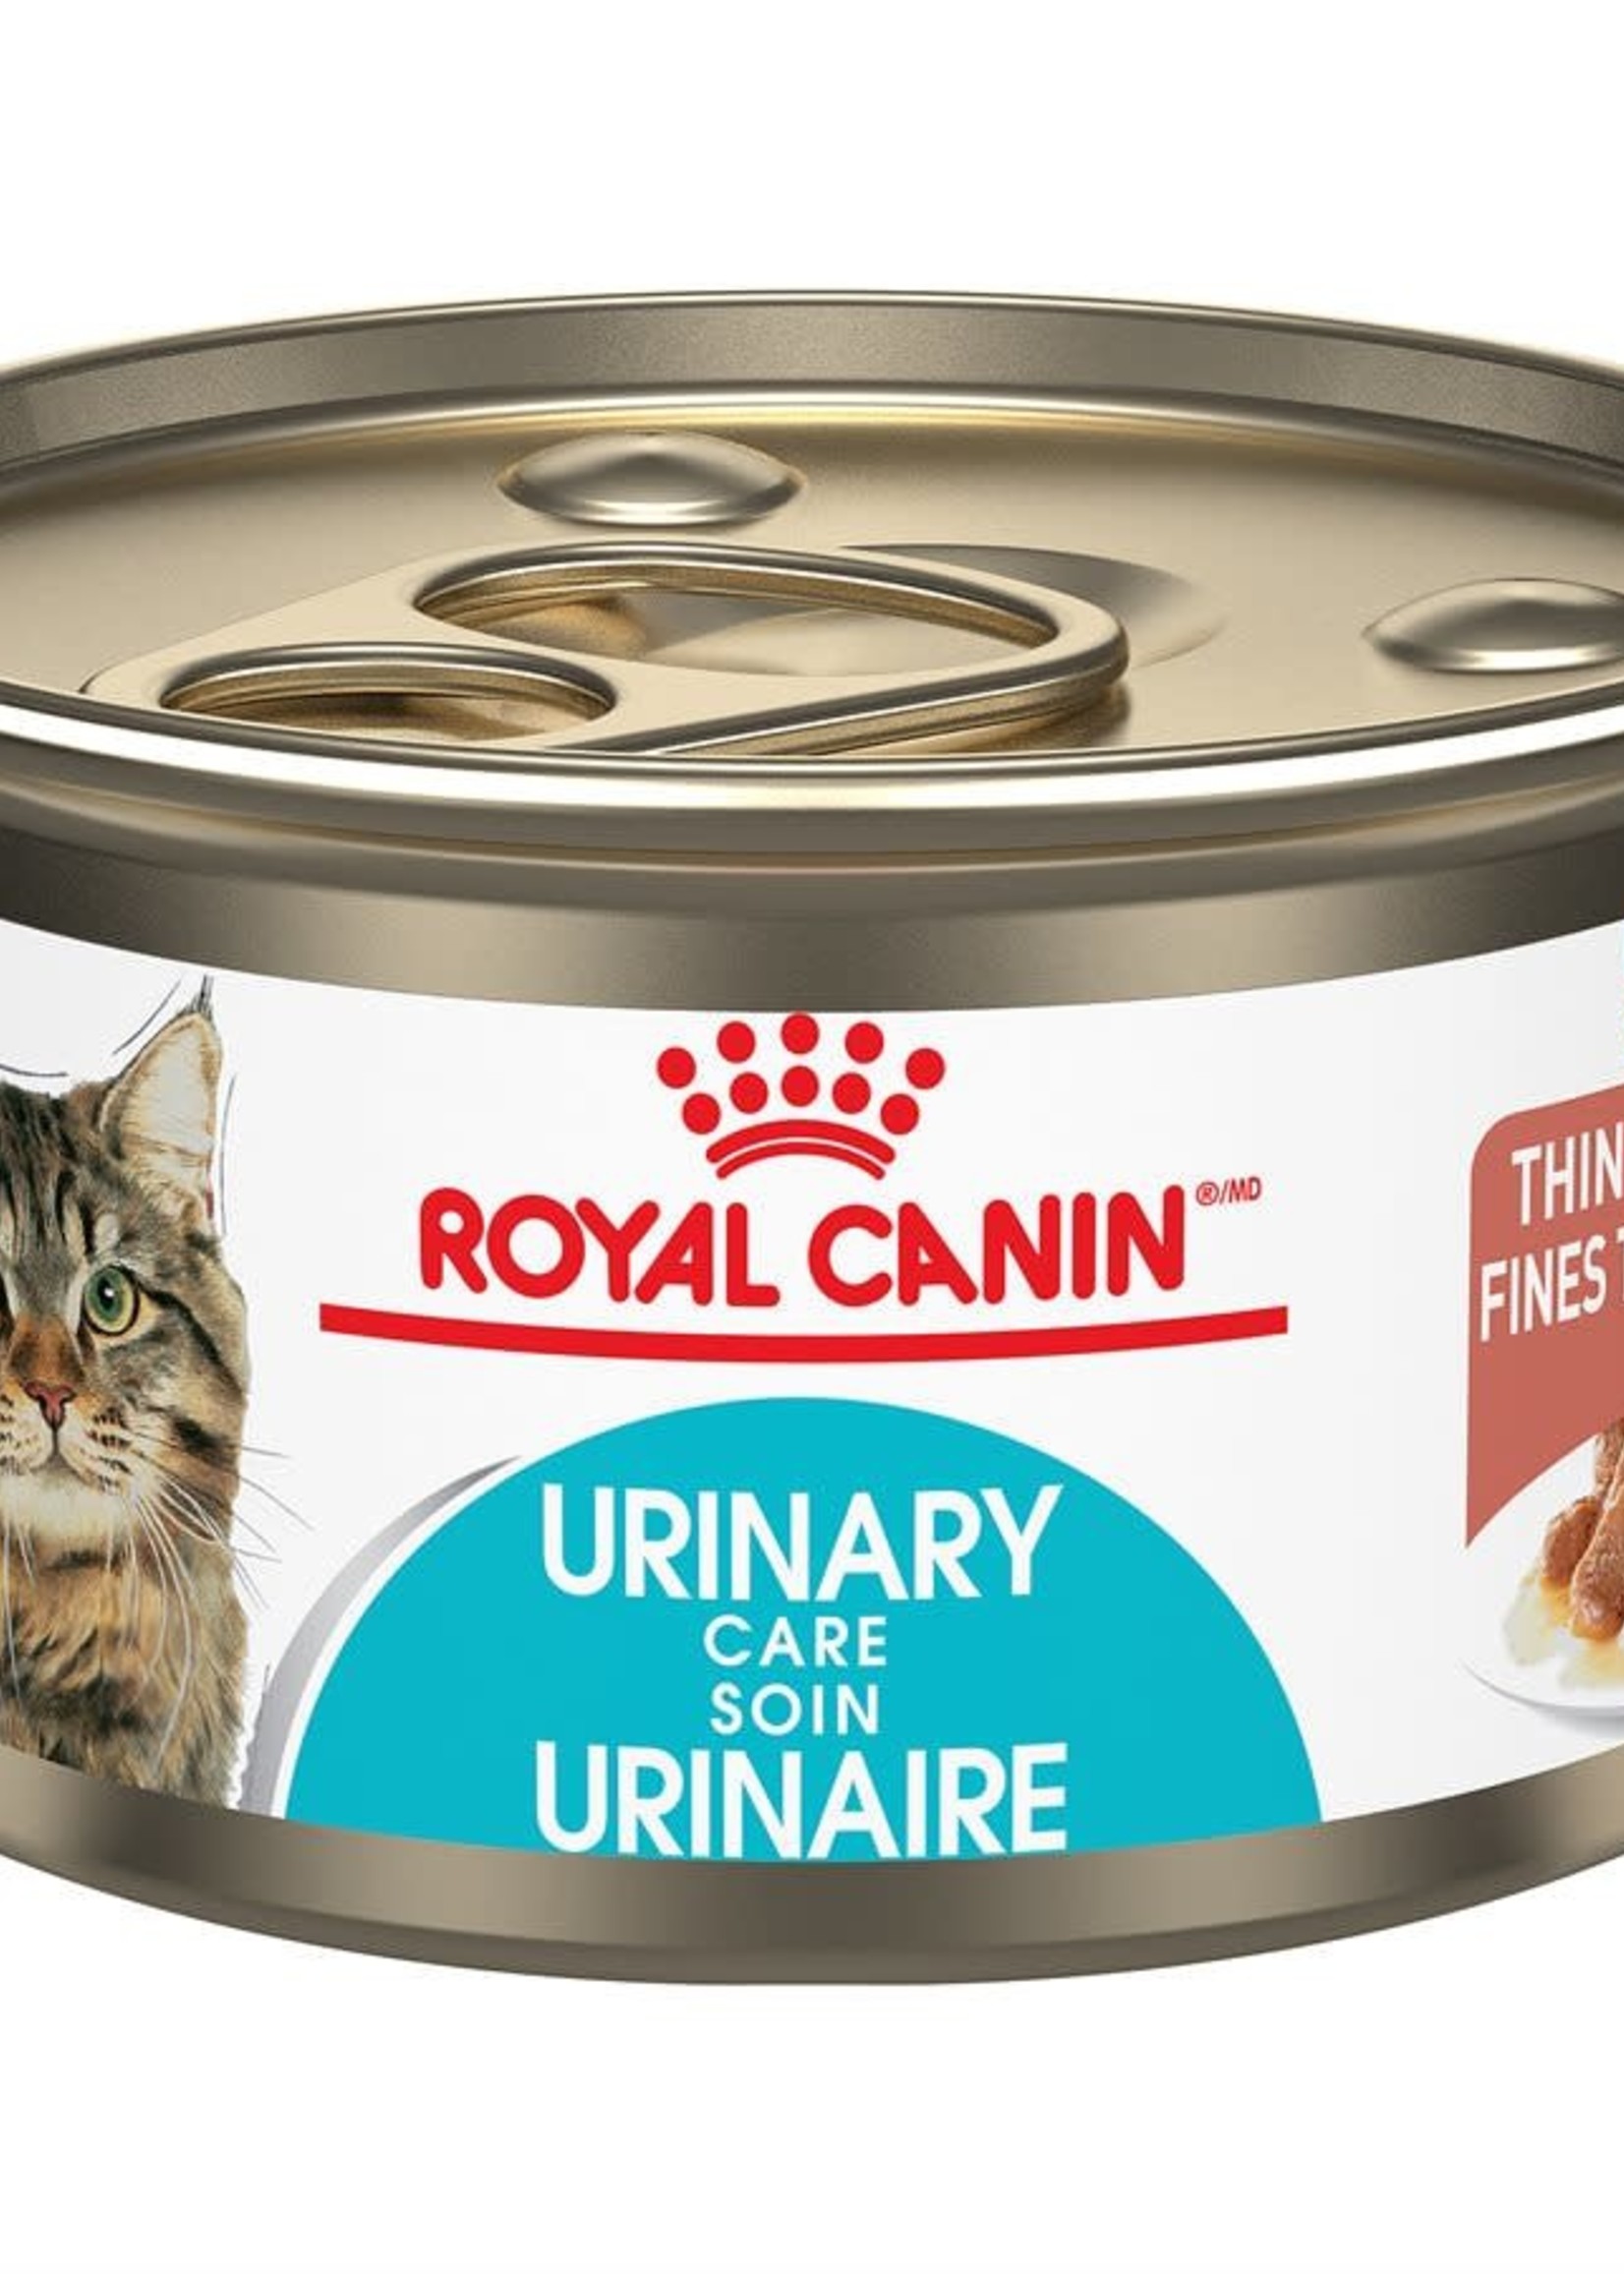 Royal Canin® Royal Canin® Urinary Care 3oz